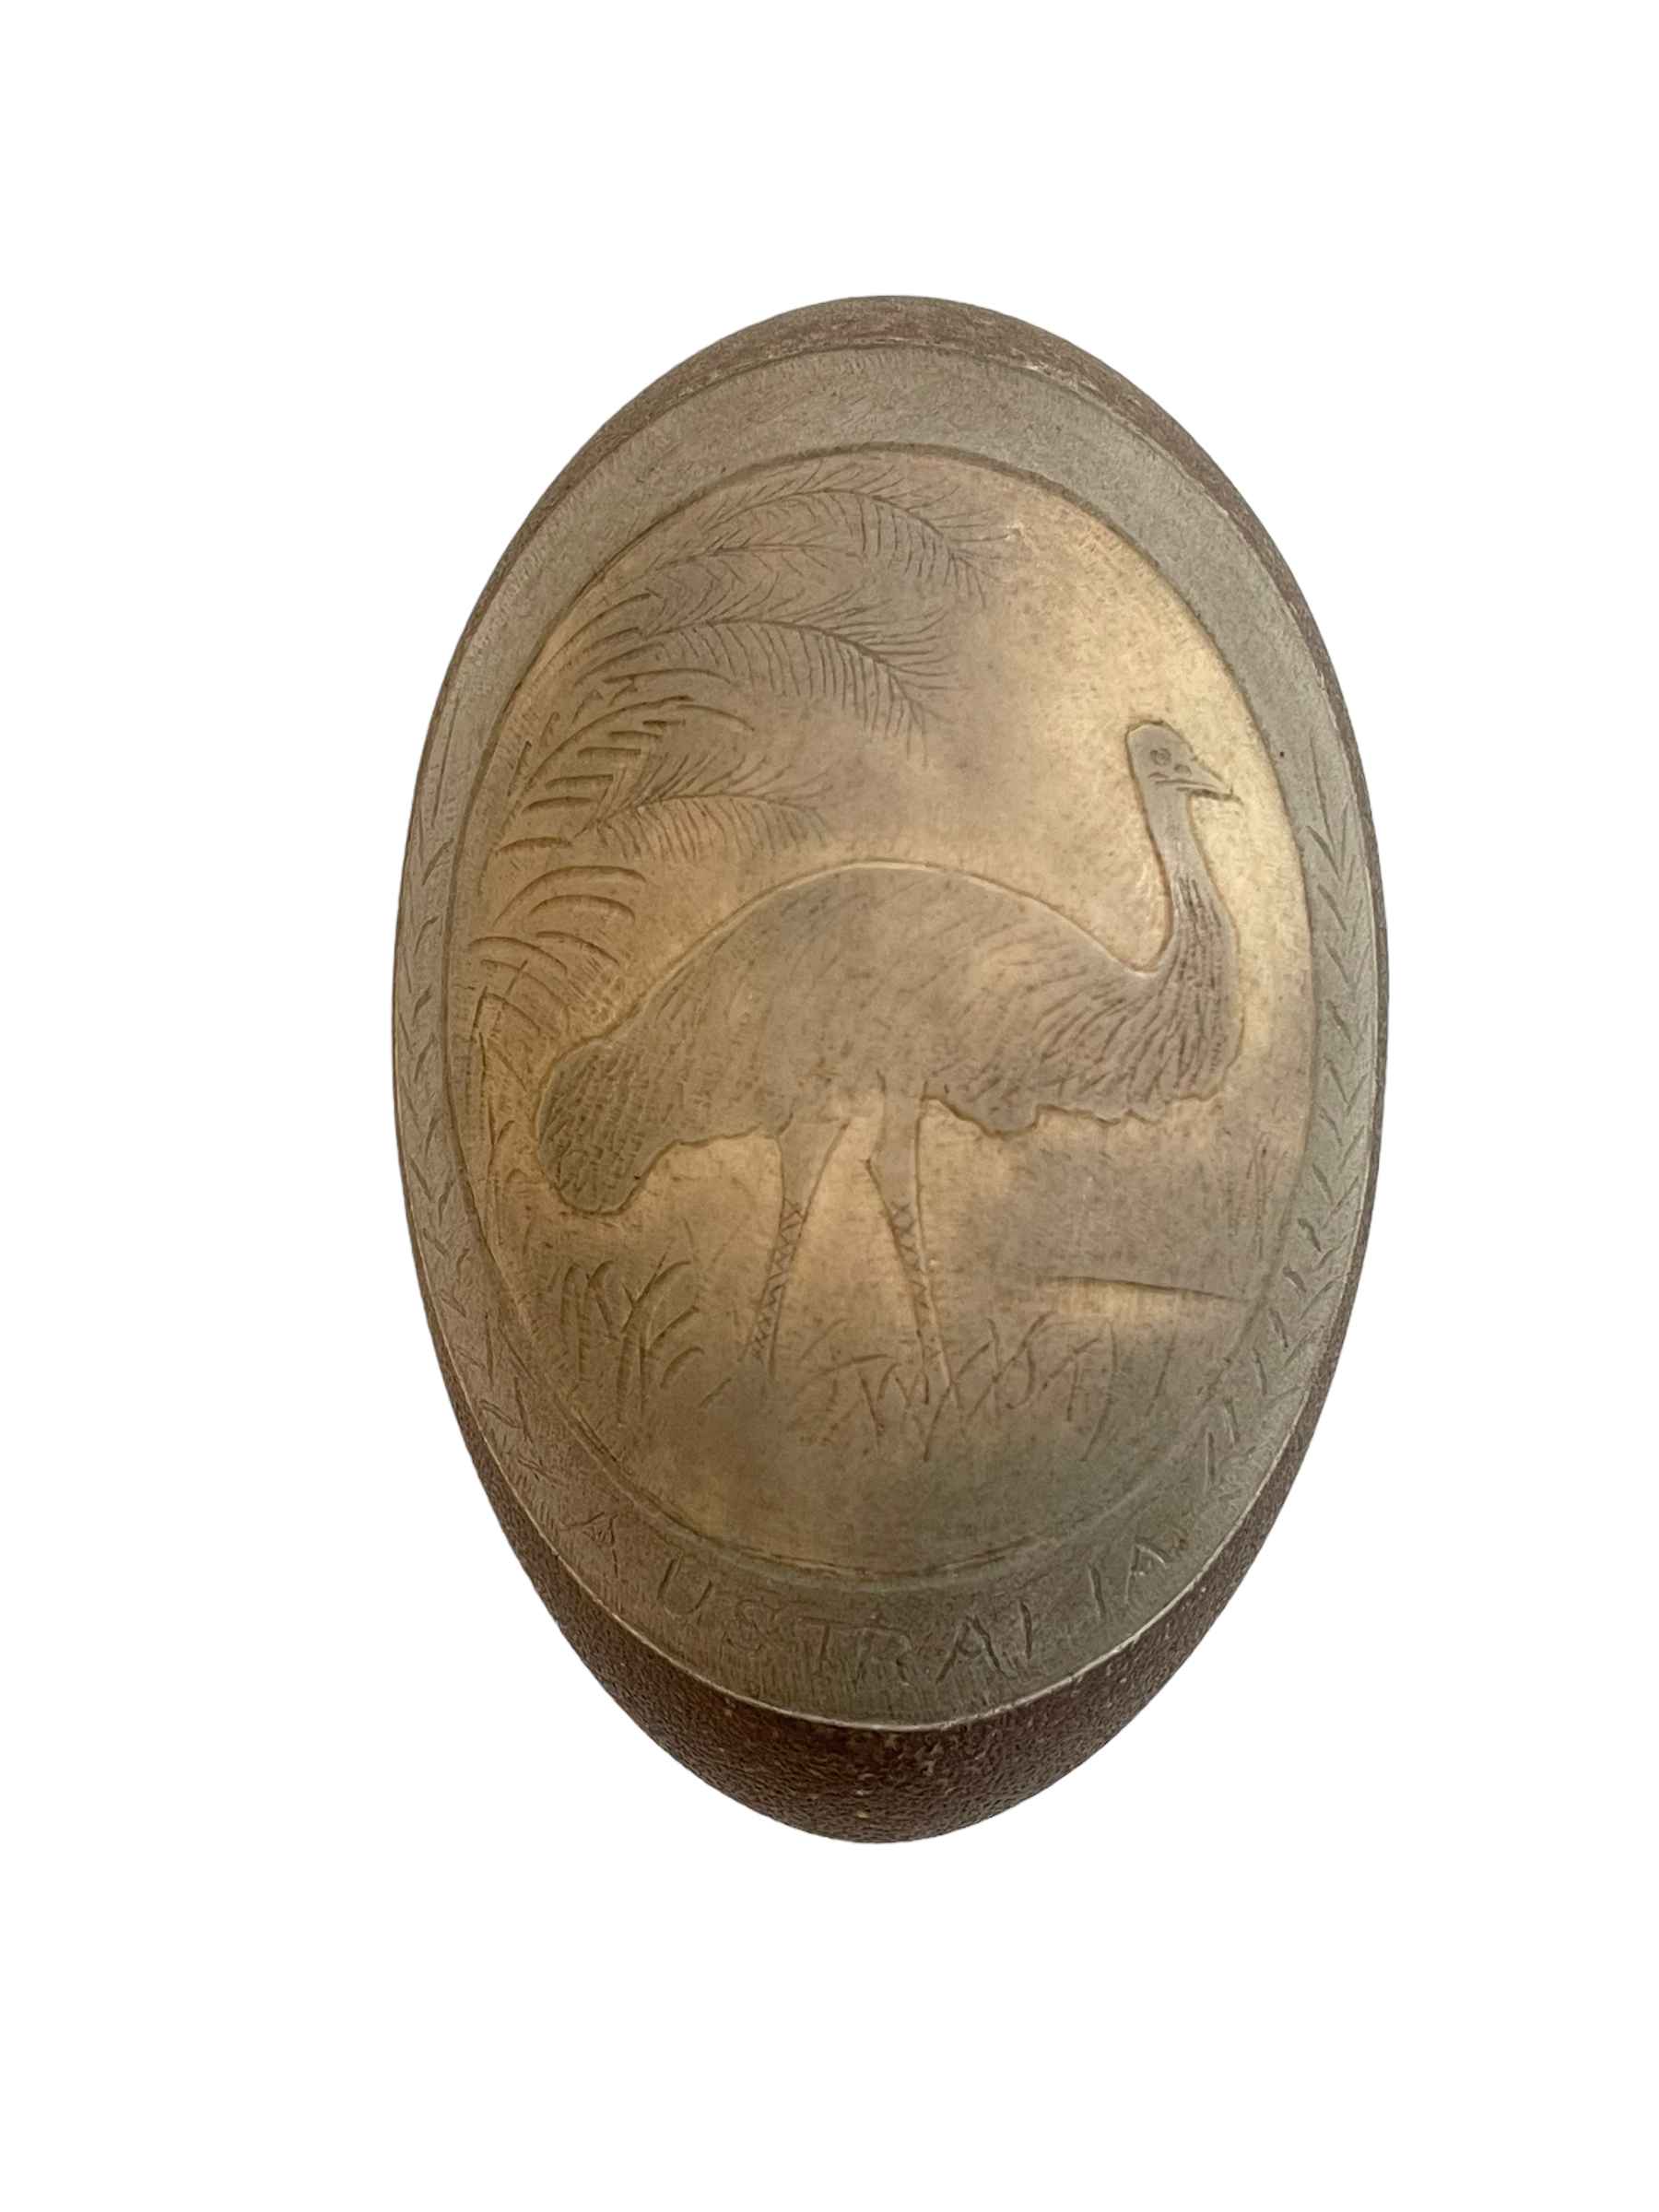 Aboriginal carved Emu egg with image of Emu.